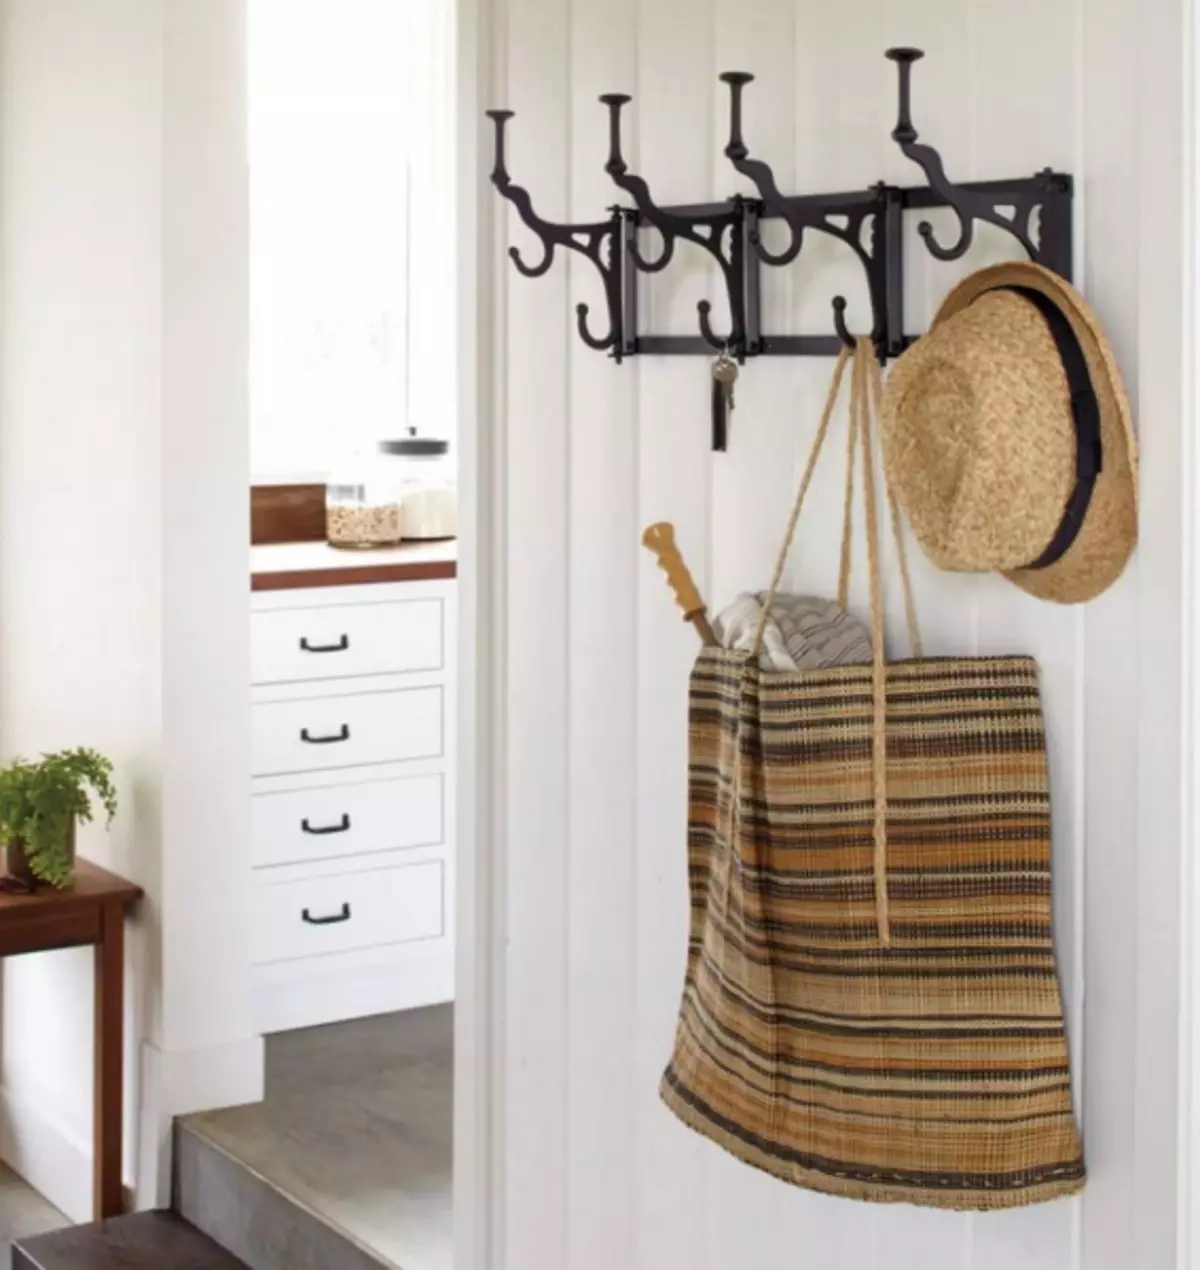 Hangers in the hallway - wall, outdoor or panel